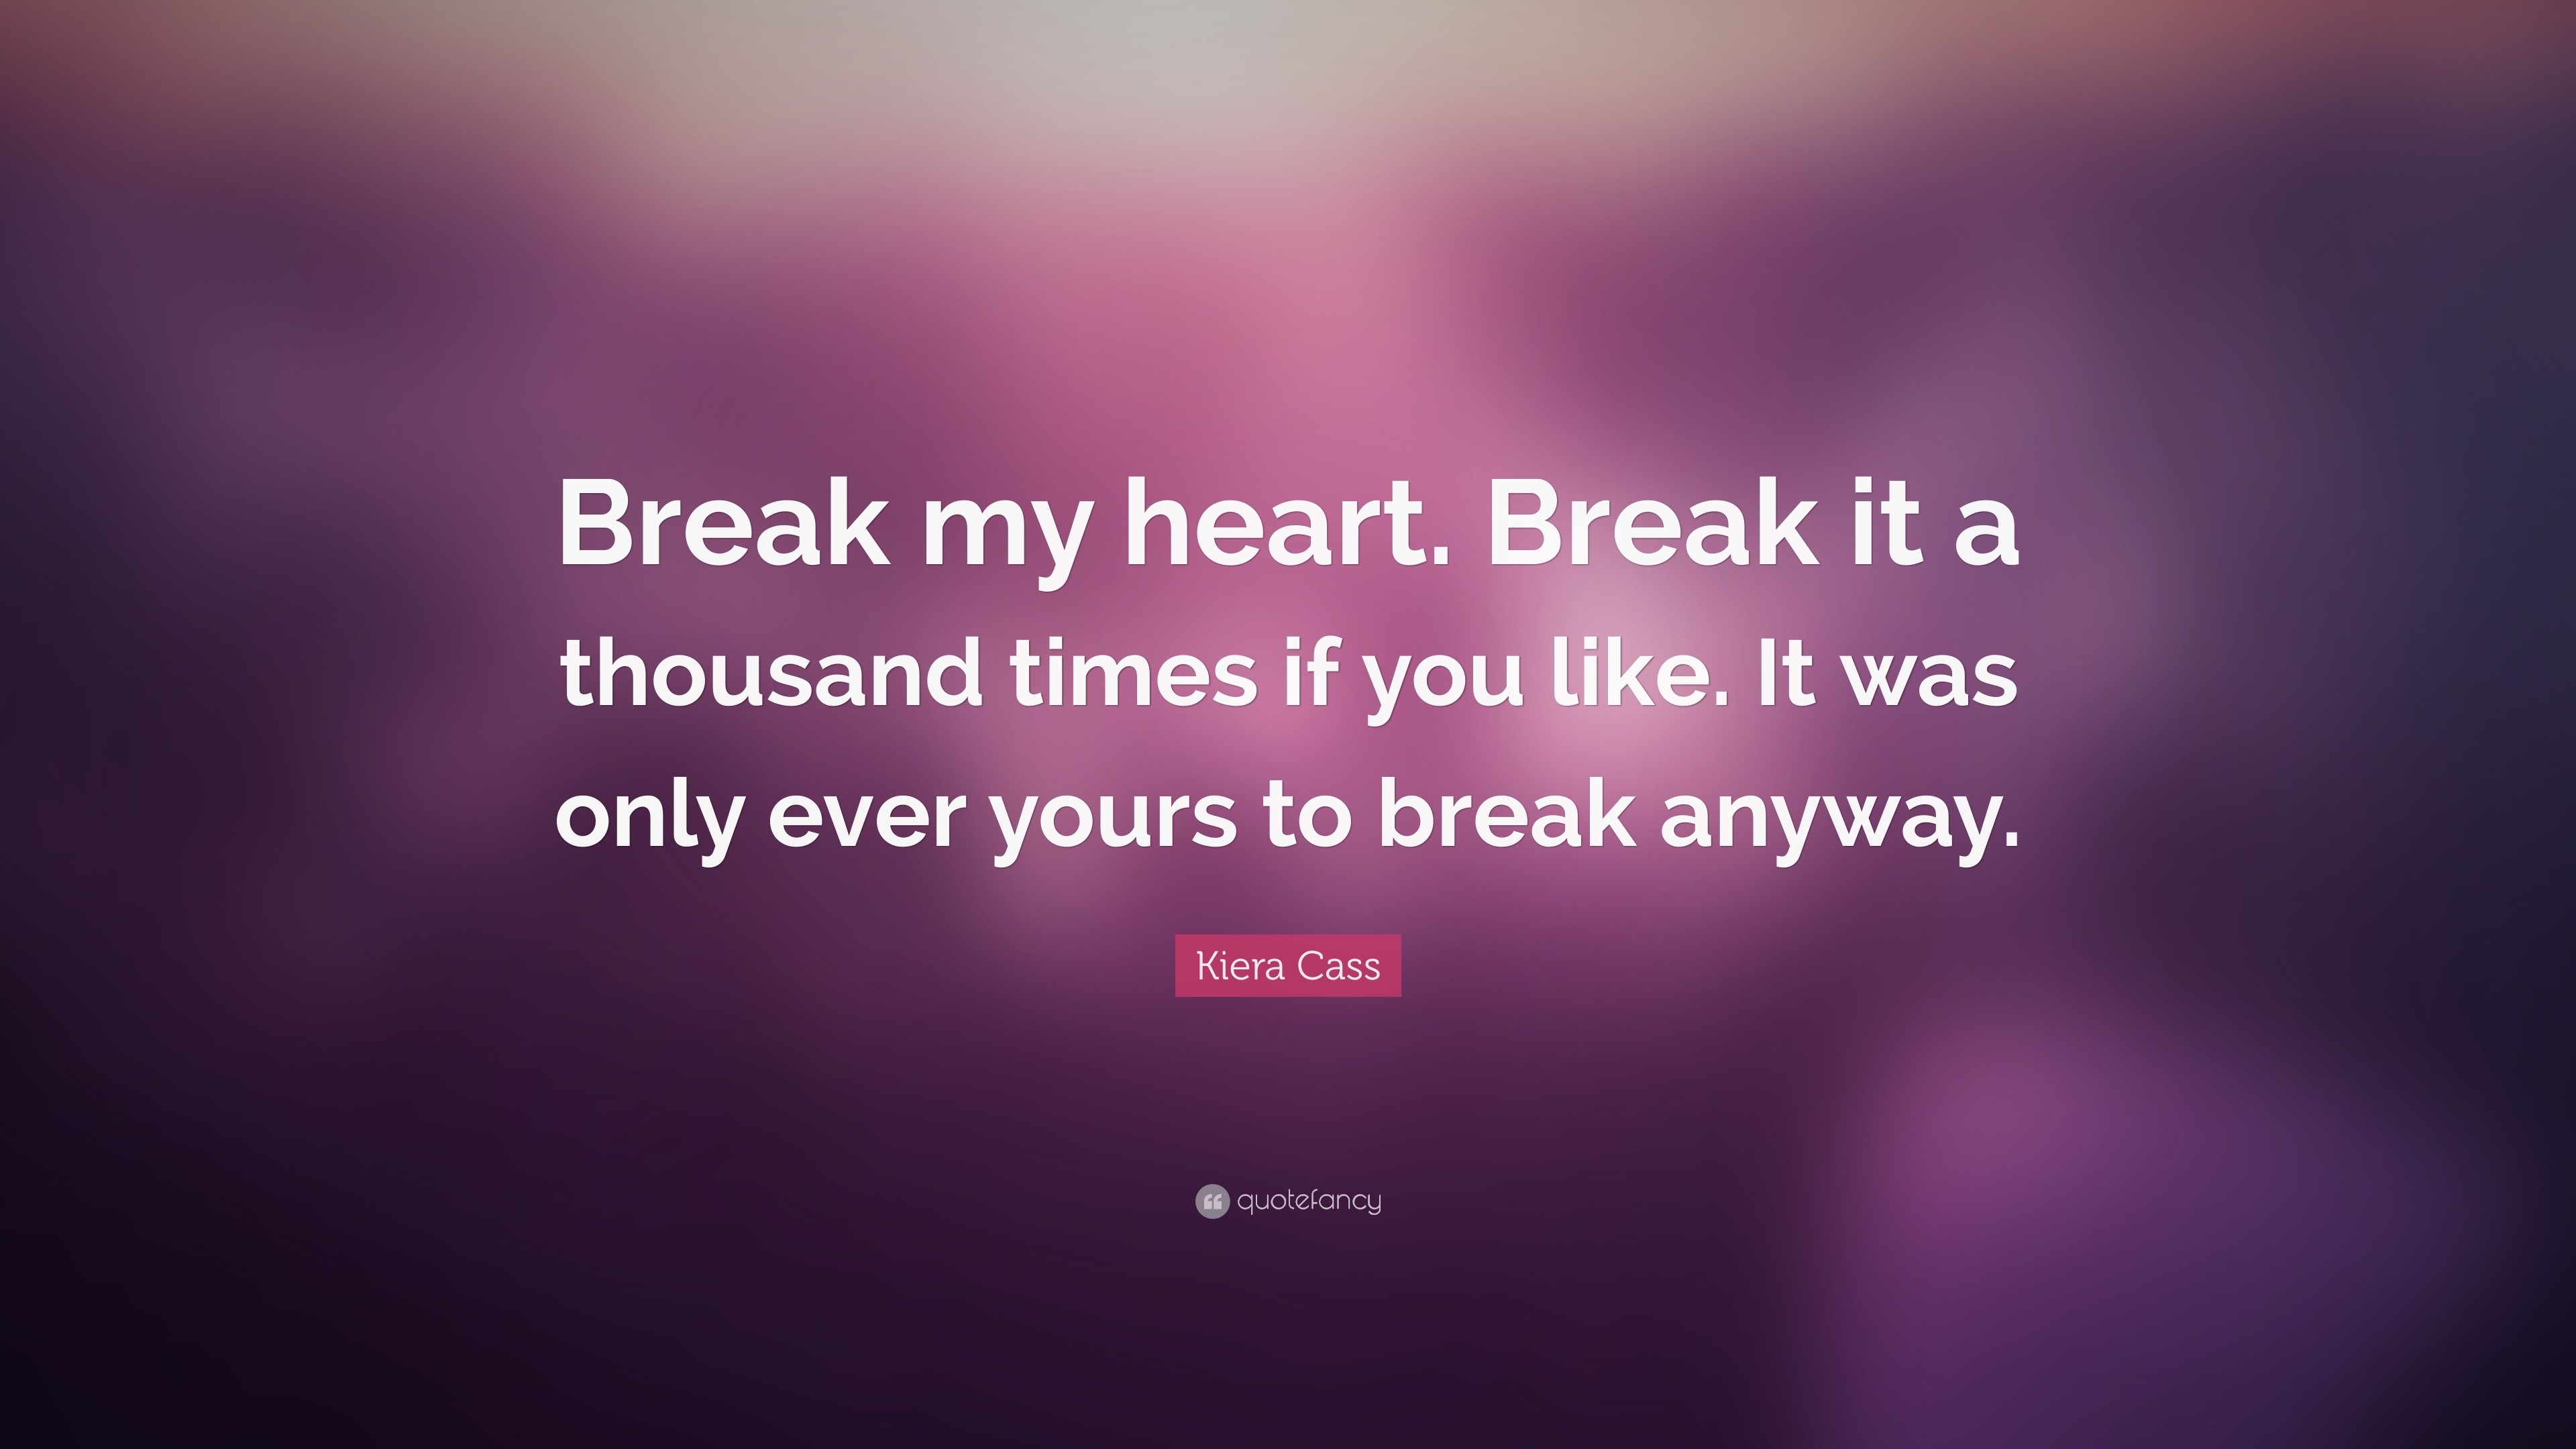 3840x2160 Kiera Cass Quote: “Break my heart. Break it a thousand times if you